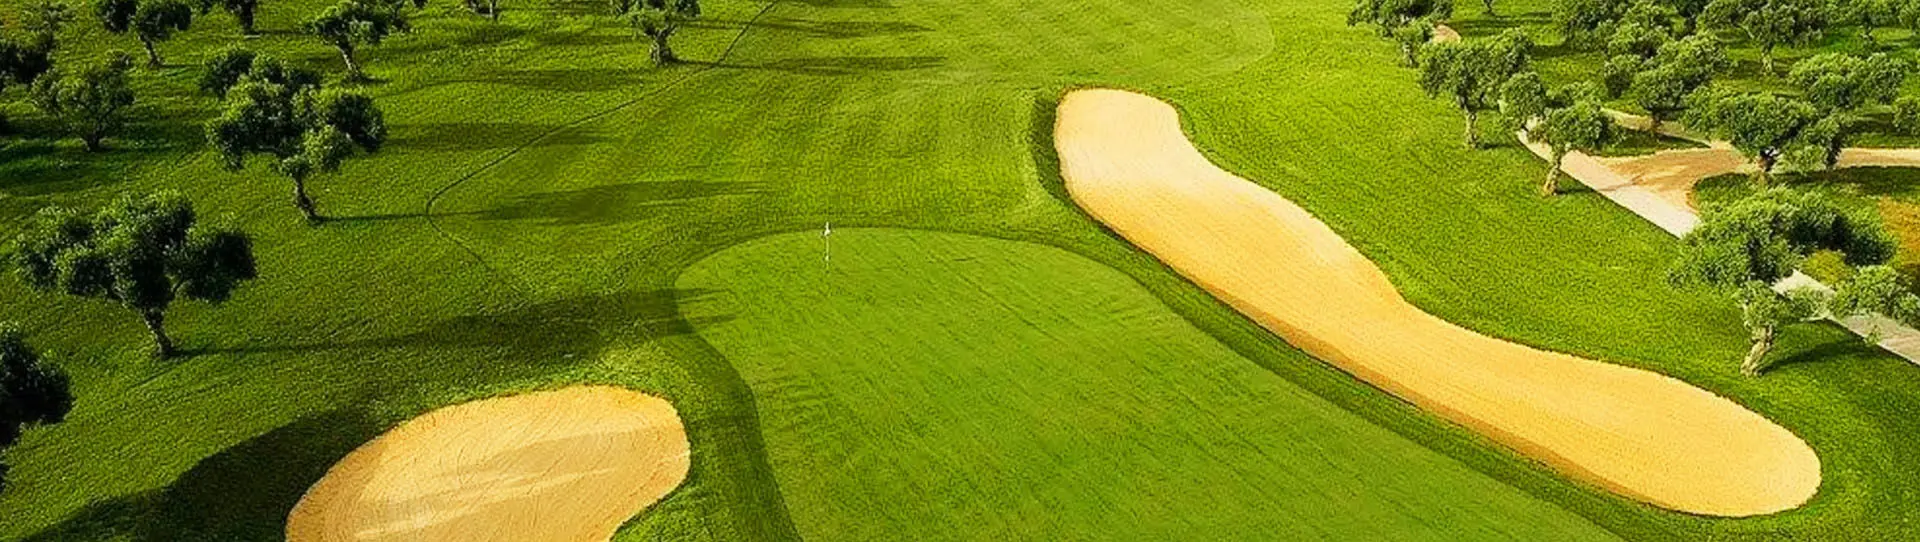 Spain golf courses - Arcos Golf Club & Country Estate - Photo 2